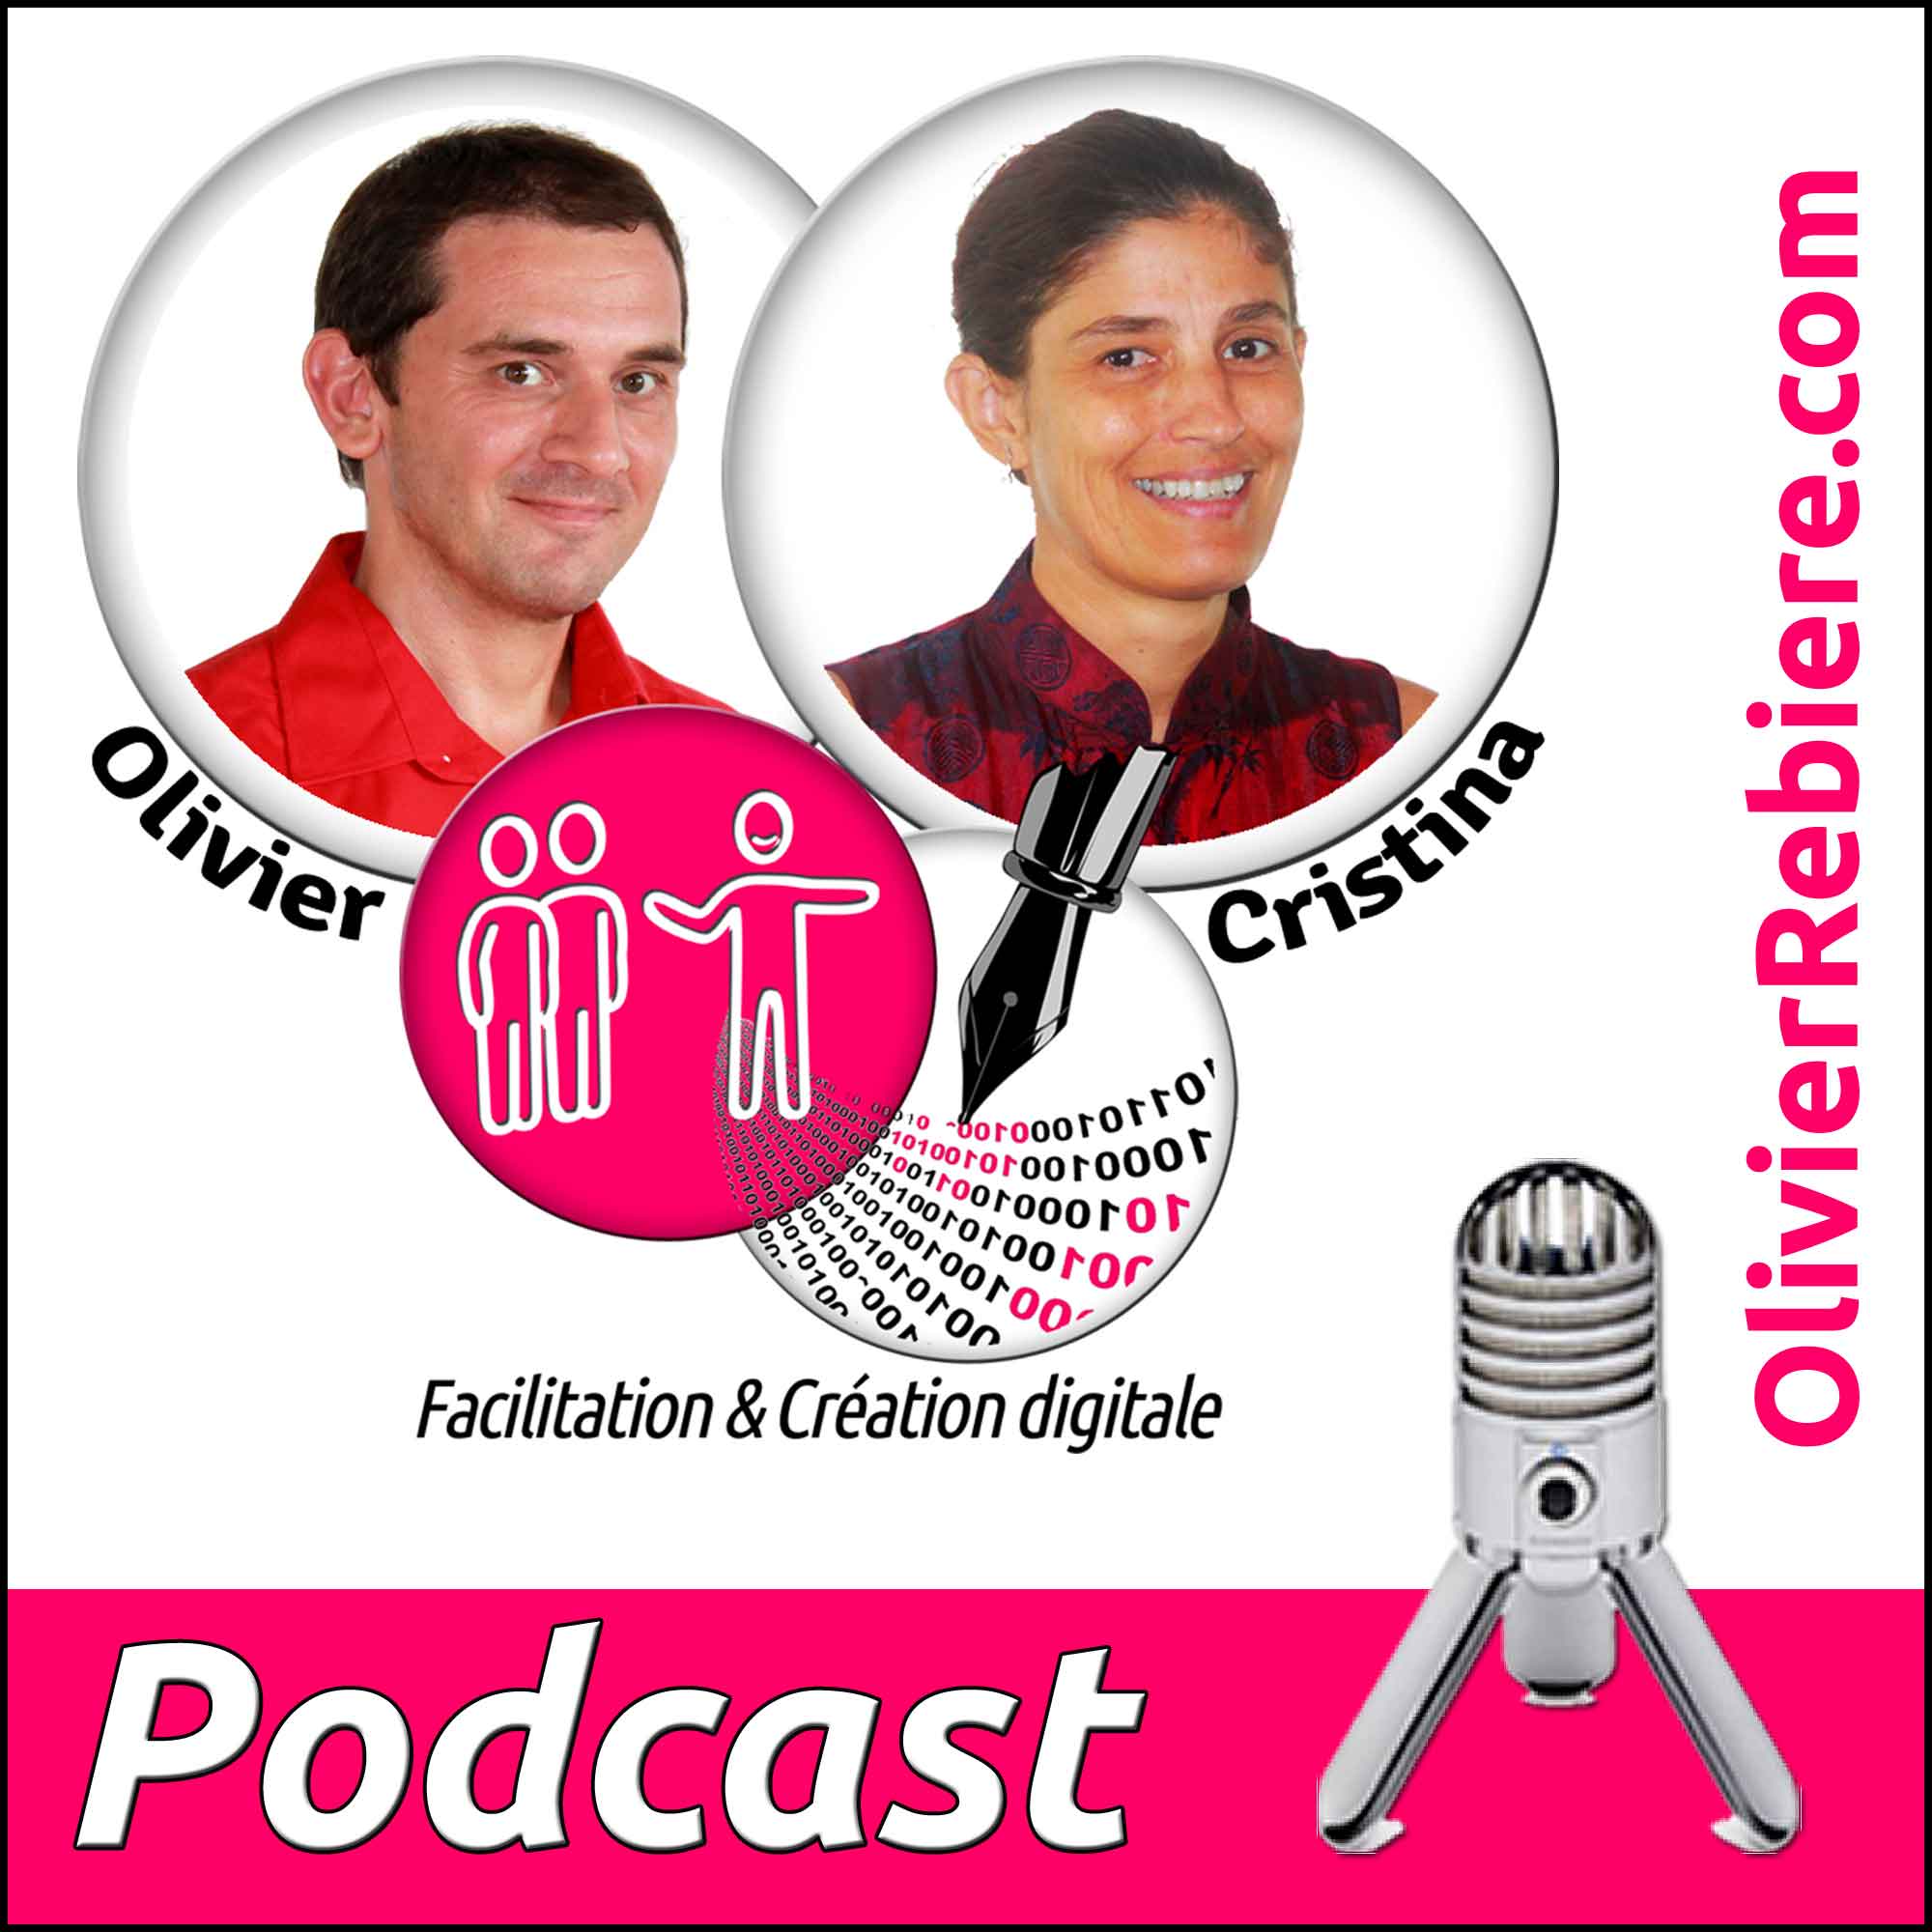 Podcast - OlivierRebiere.com